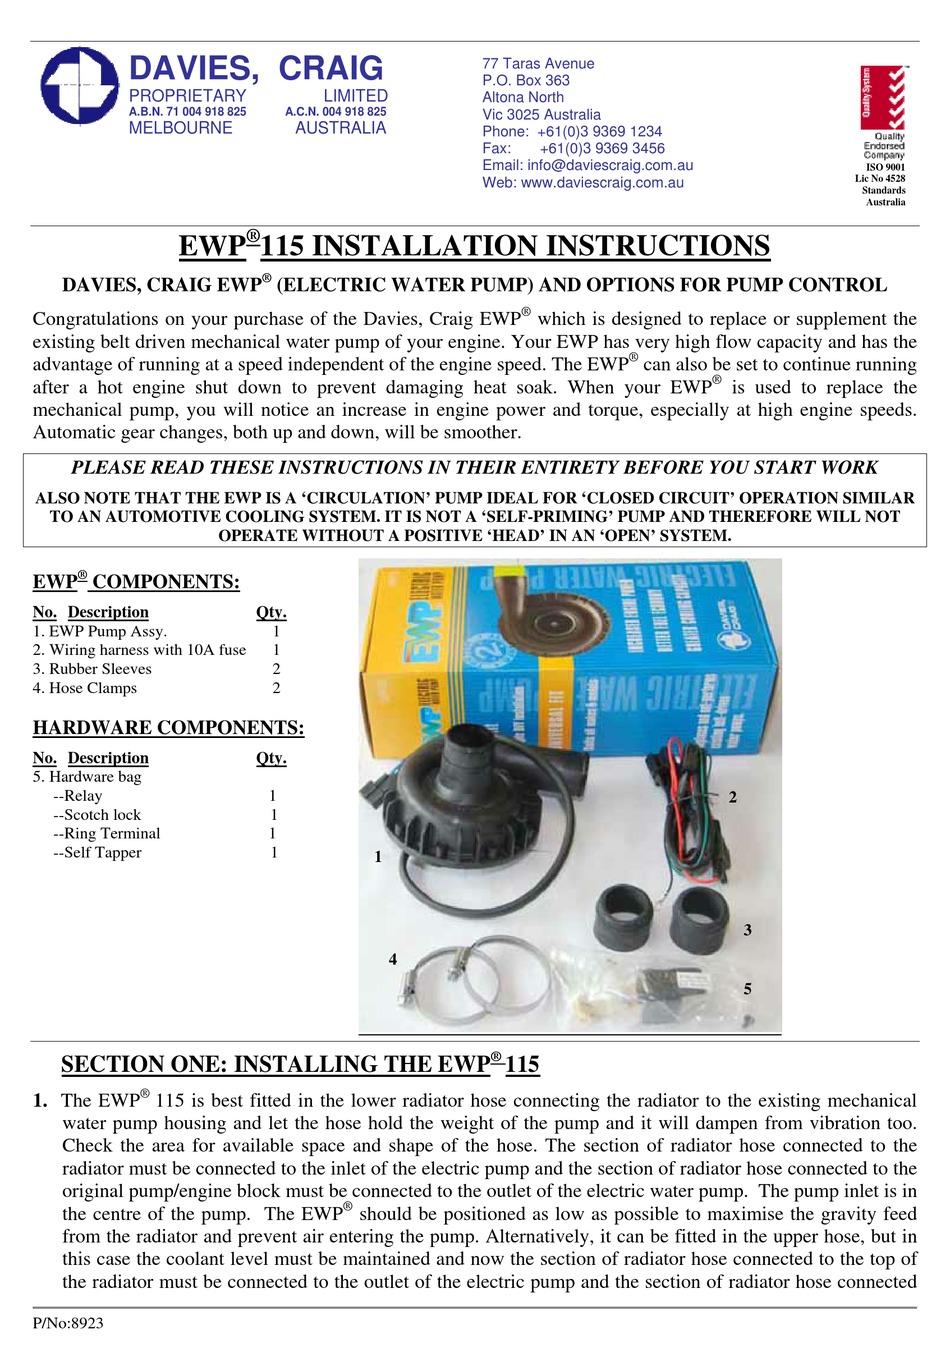 Davies Craig Ewp 115 Installation Instructions Manual Pdf Download Manualslib